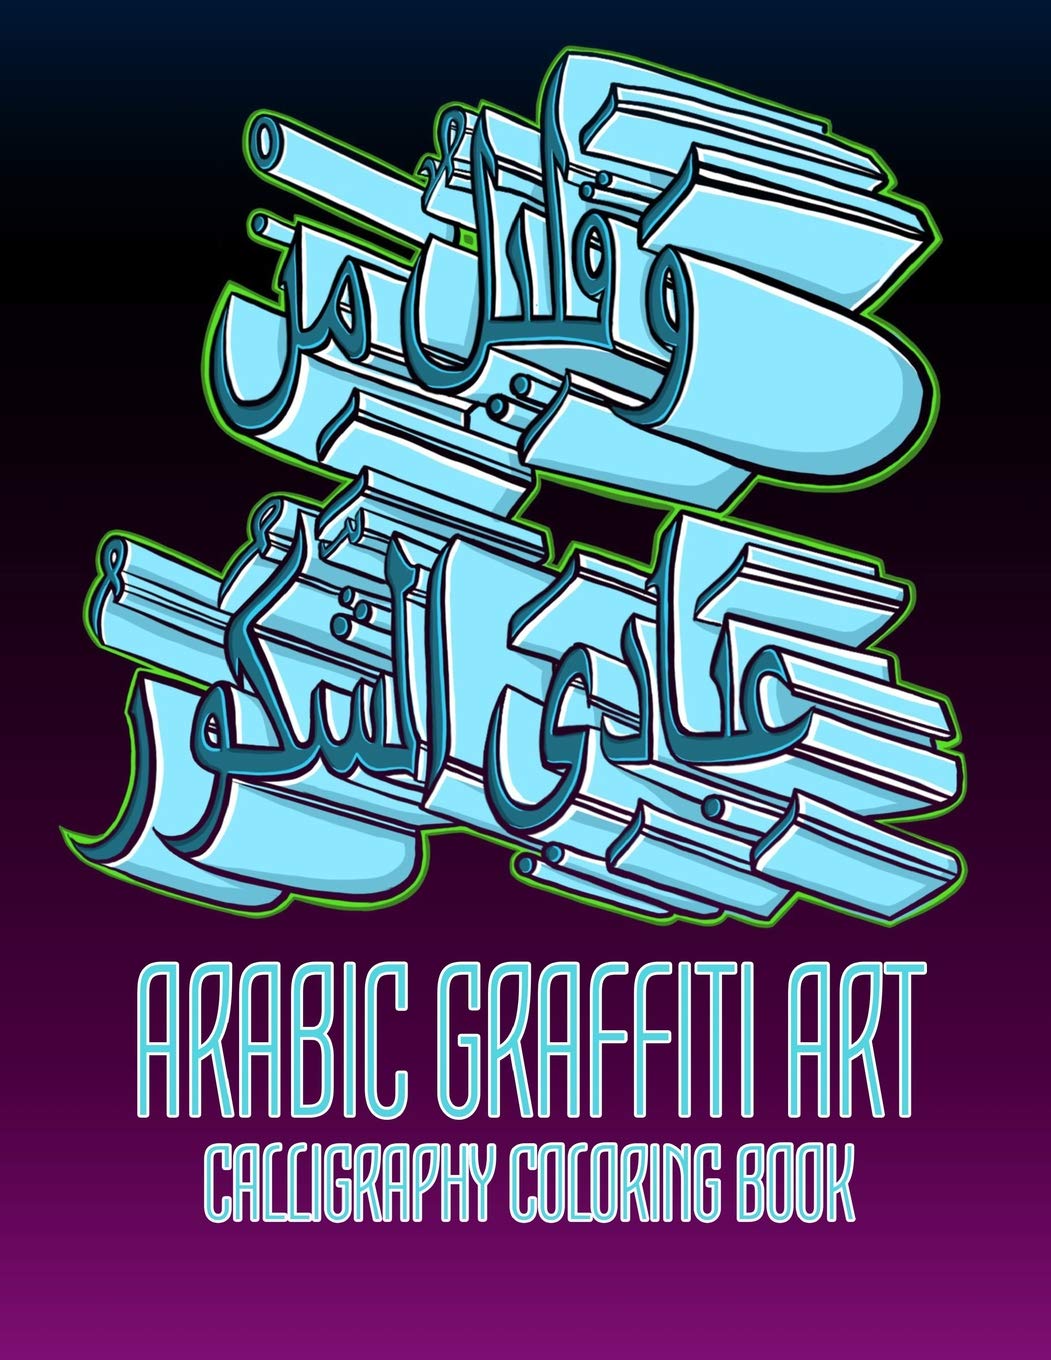 Arabic Graffiti Art: Calligraphy Coloring Book